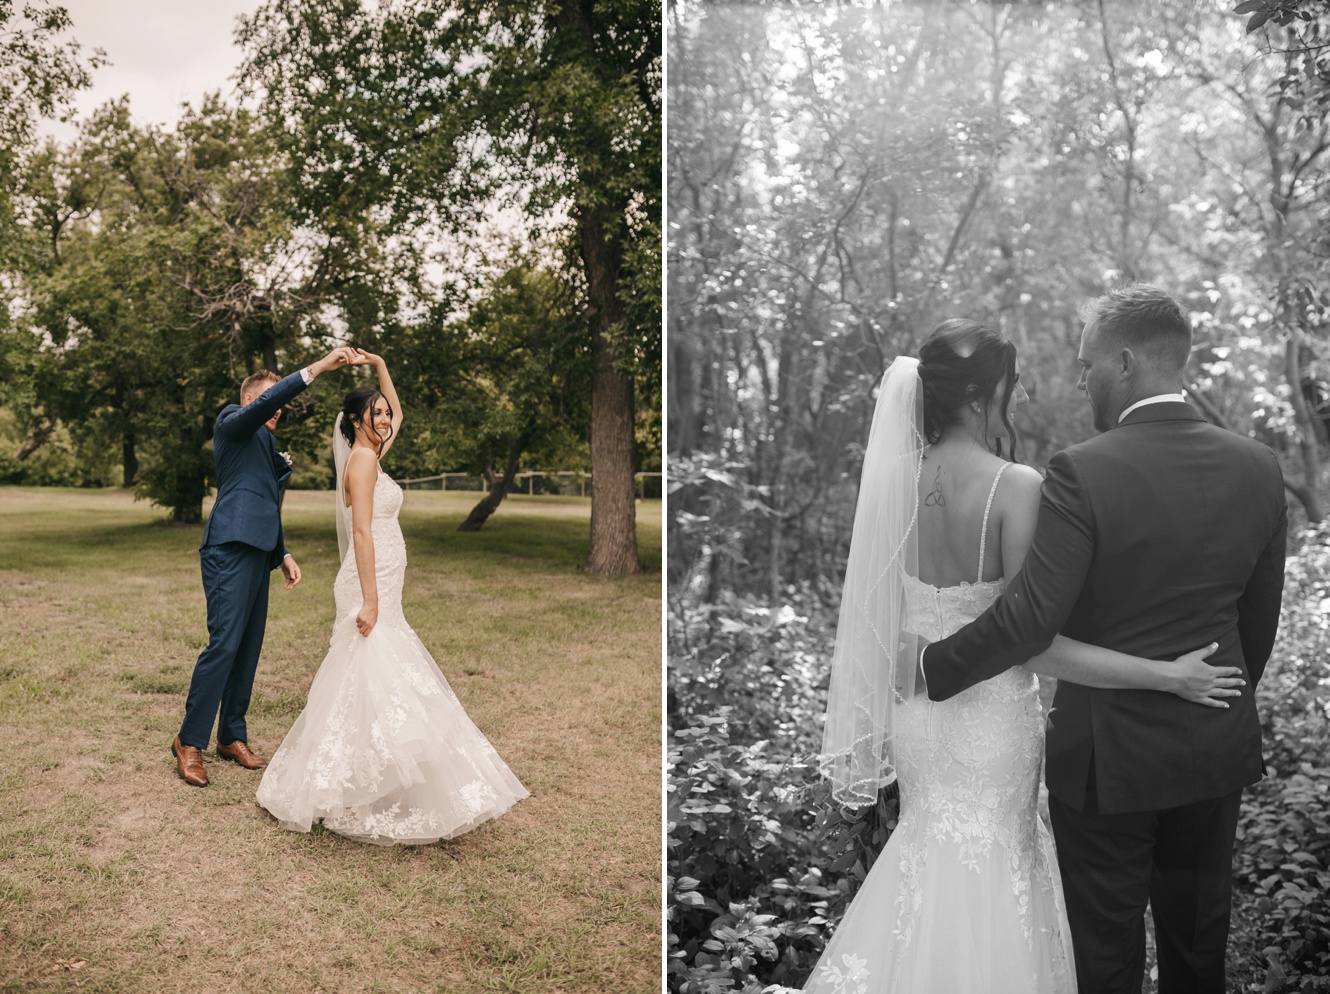 How to take magical wedding photos